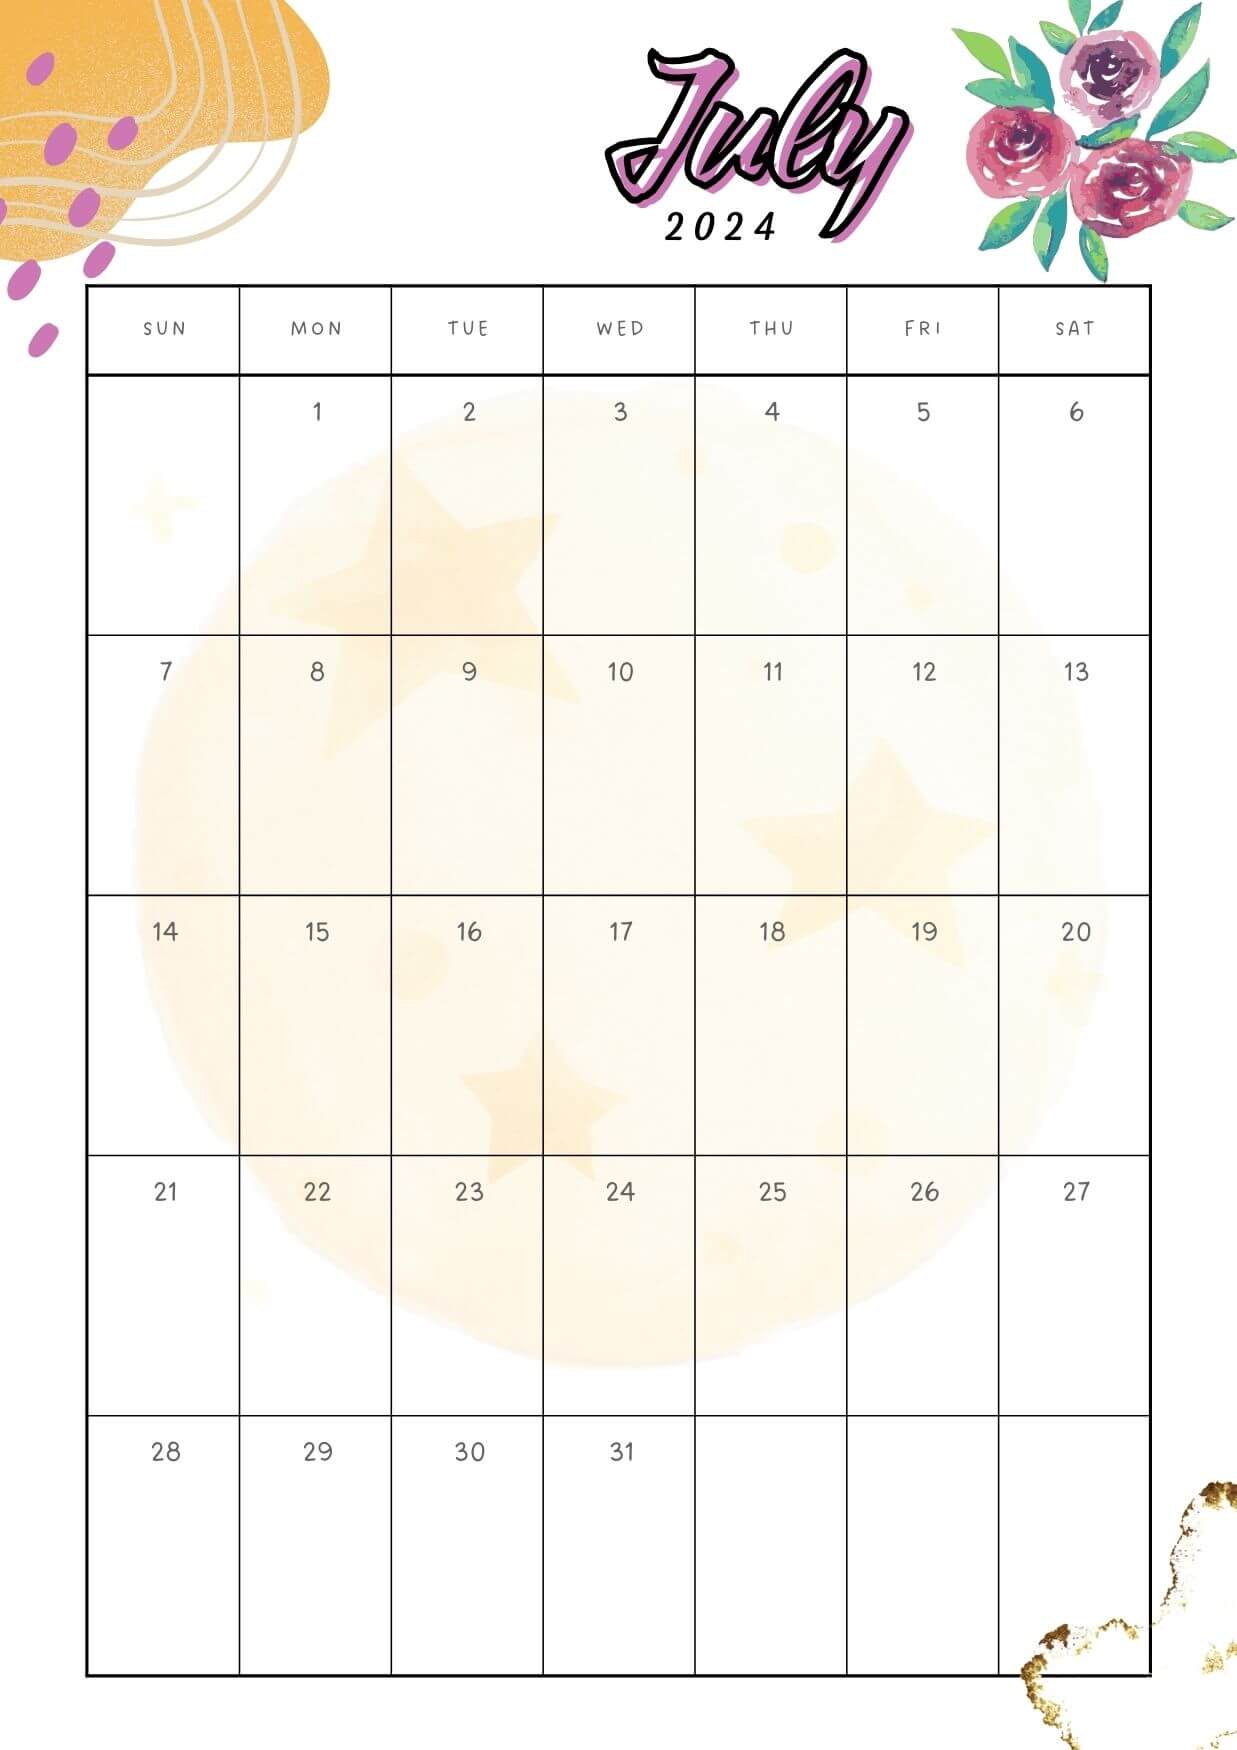 July 2024 Calendars Pack